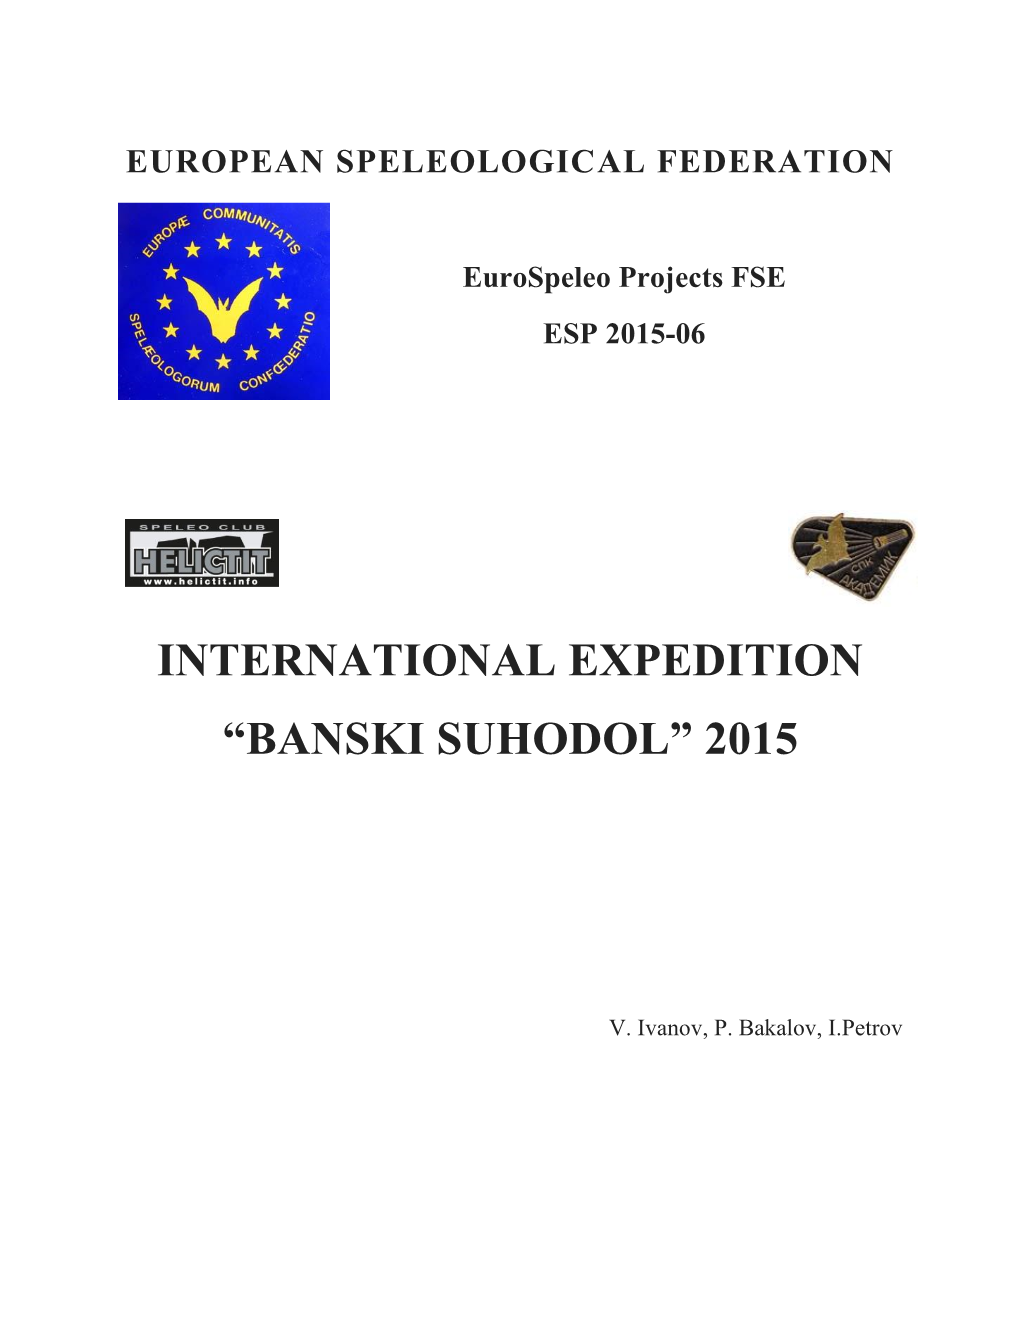 International Expedition “Banski Suhodol” 2015